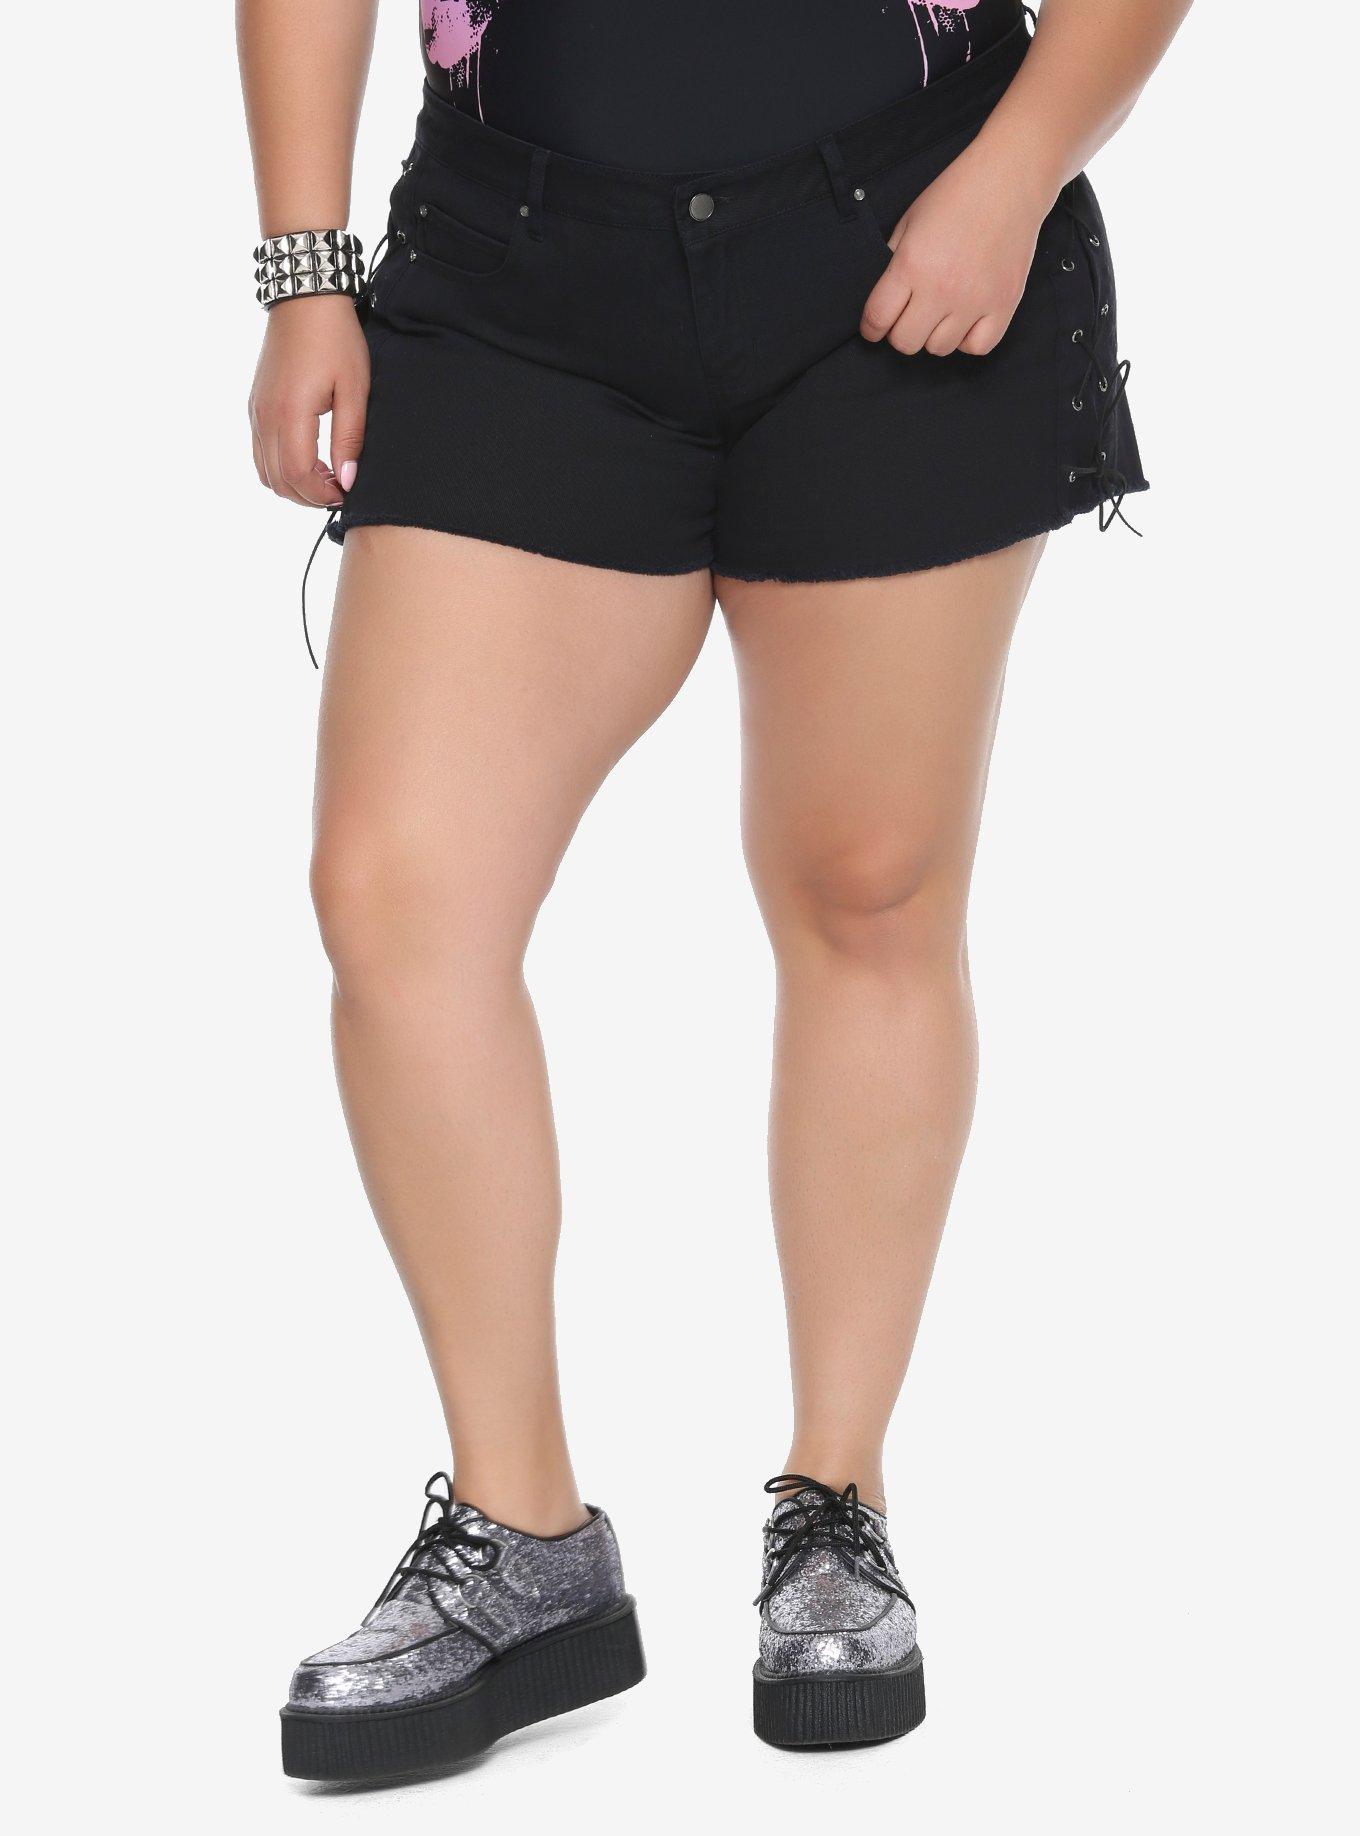 Black Lace-Up Side Denim Shorts Plus Size, BLACK, hi-res